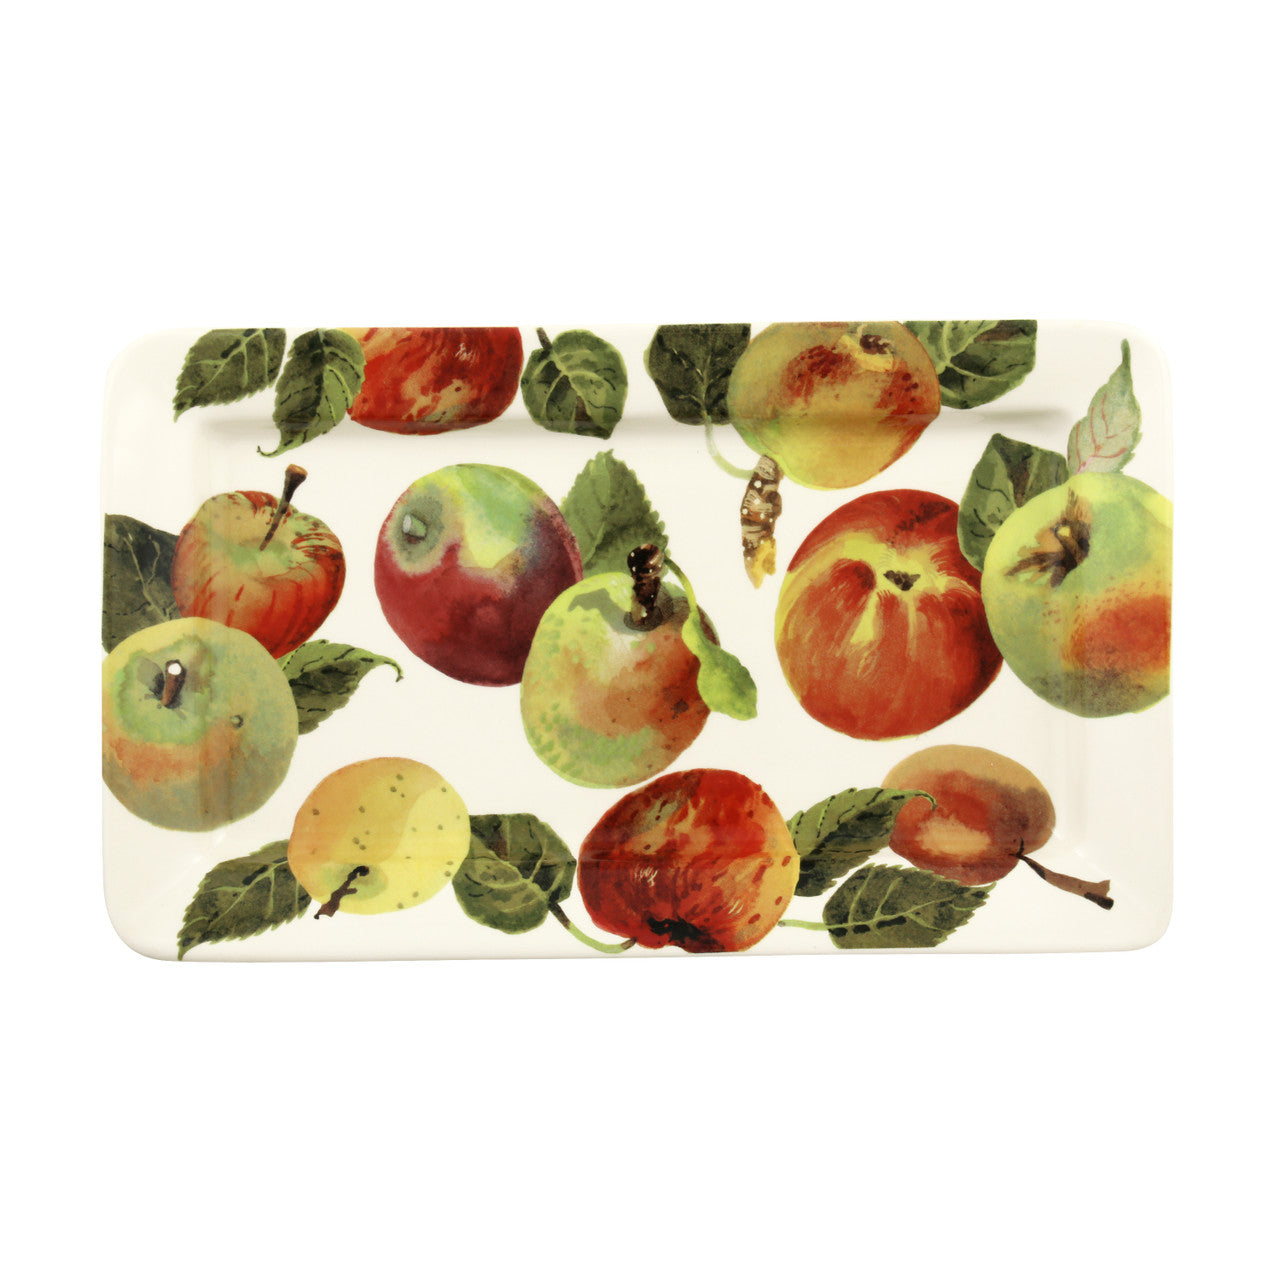 Emma Bridgewater Apples Medium Oblong Plate.